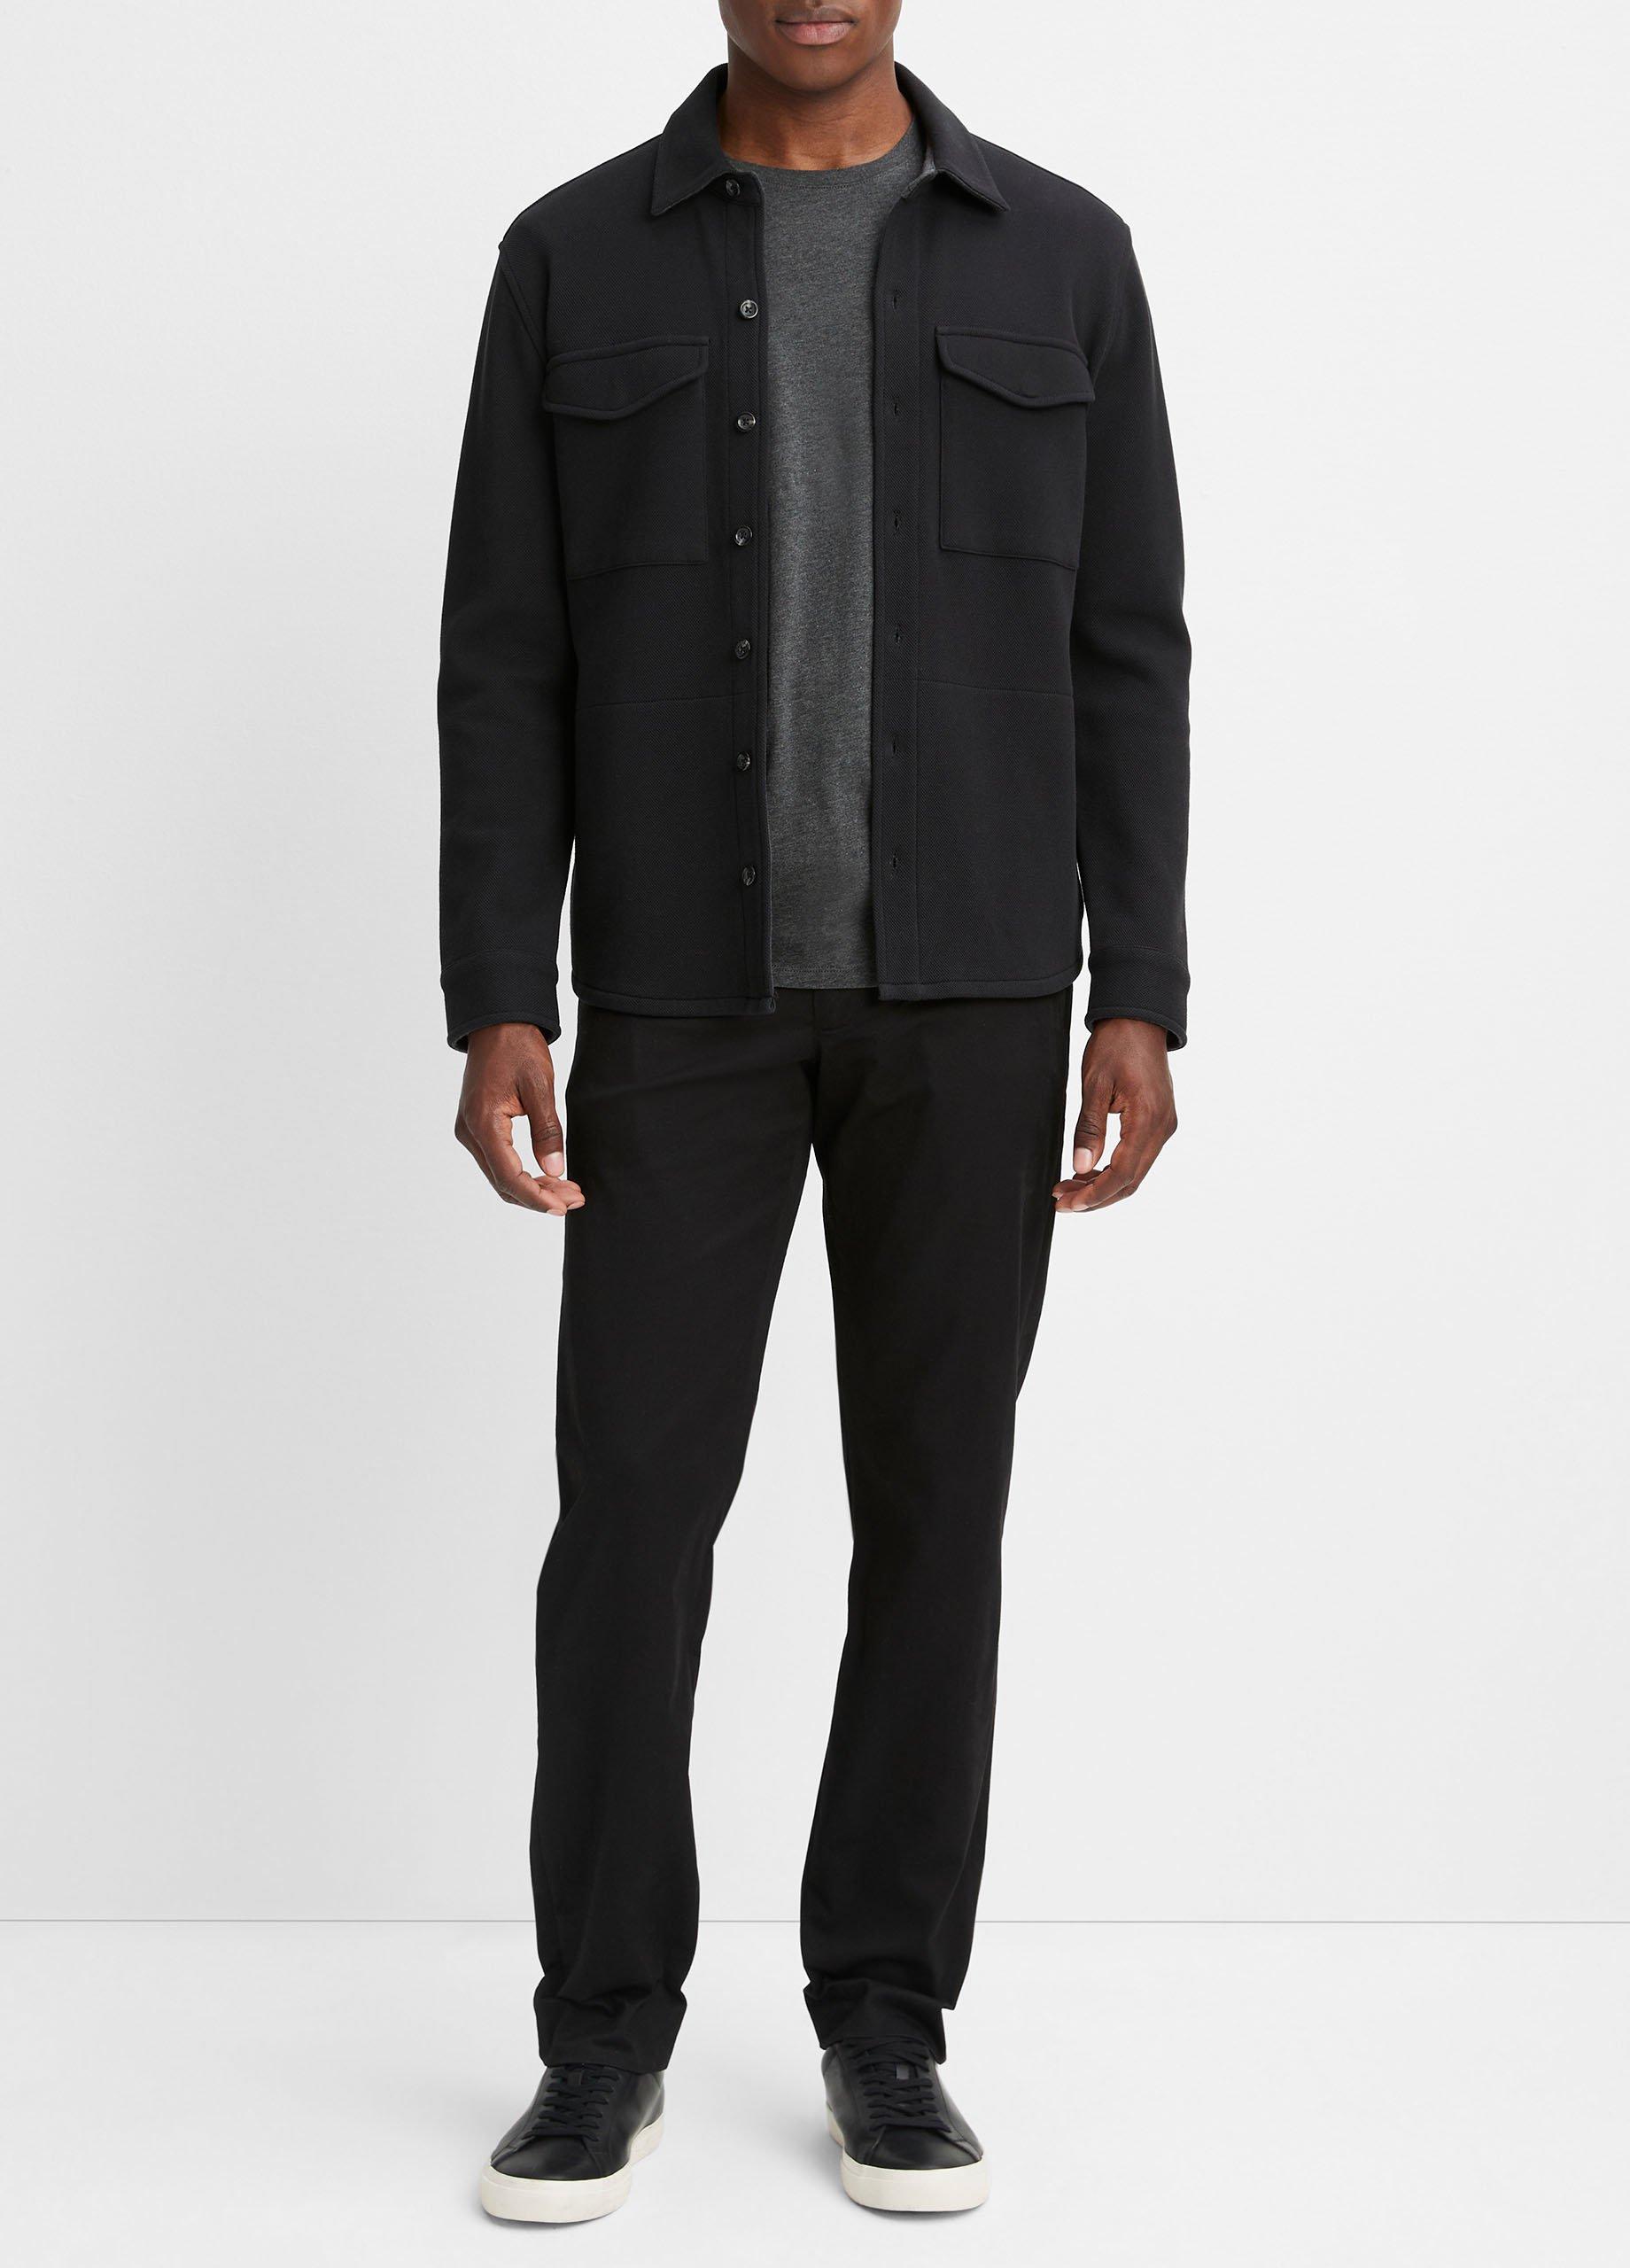 Double-Knit Piqué Shirt Jacket, Black/medium Heather Grey, Size M Vince